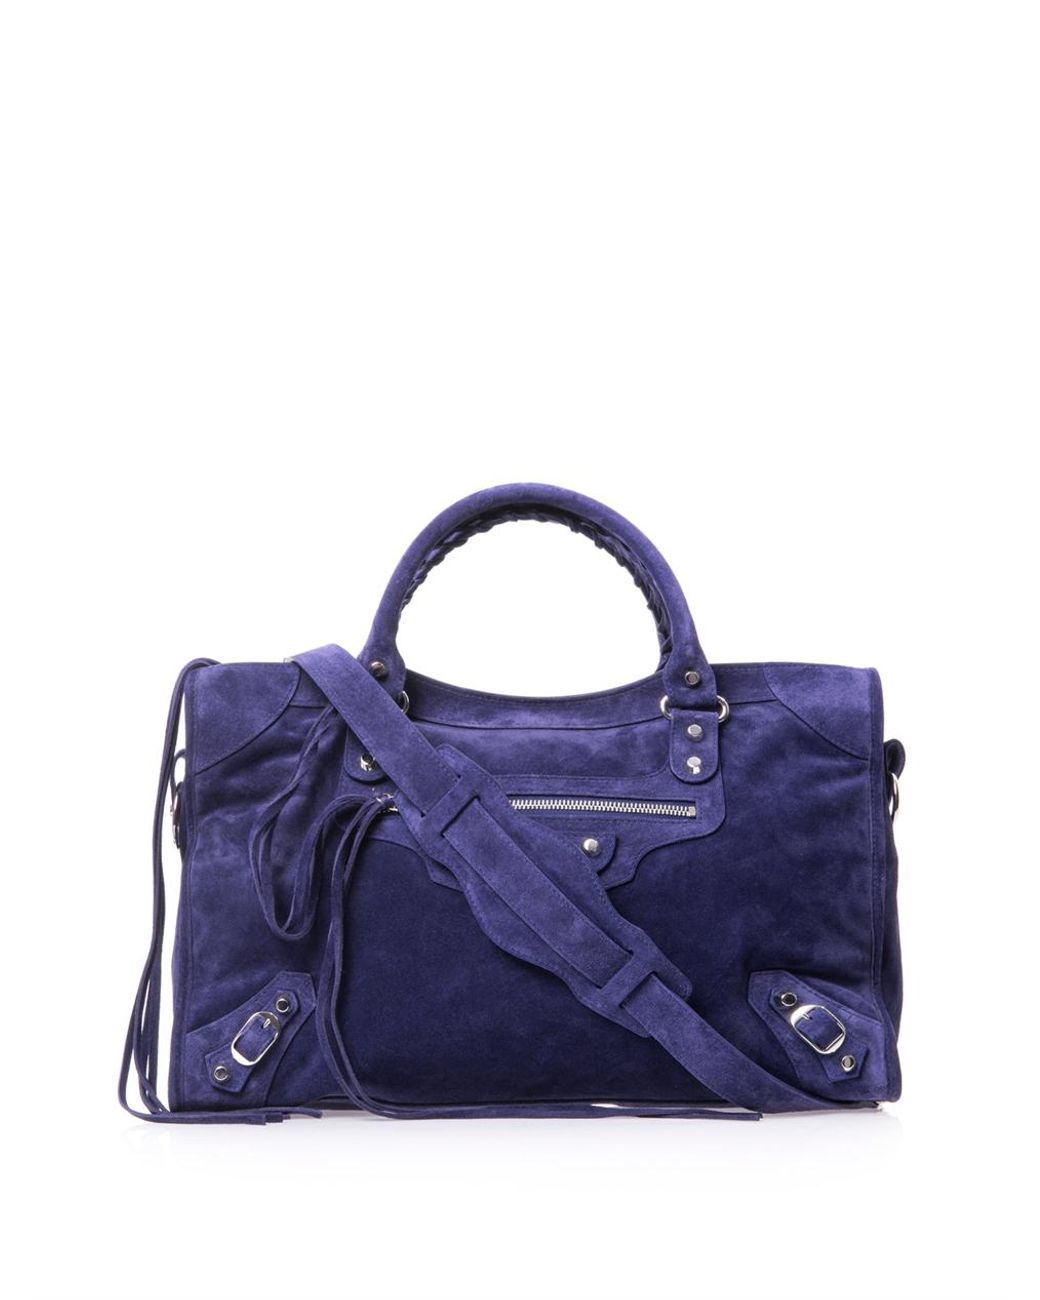 Balenciaga Classic Suede City Bag in Blue | Lyst